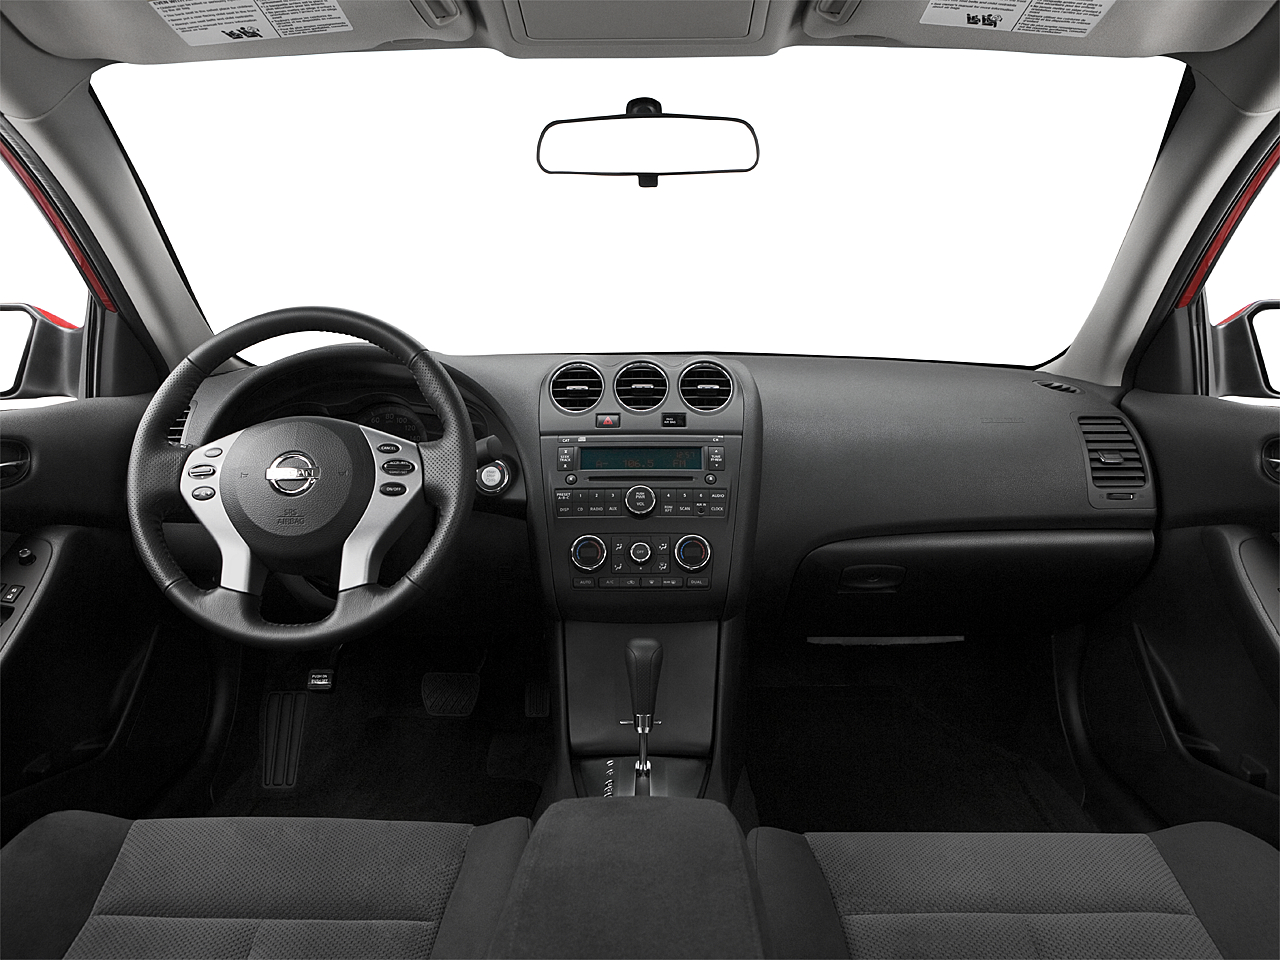 2007 Nissan Altima Hybrid 4dr Sedan - Research - GrooveCar